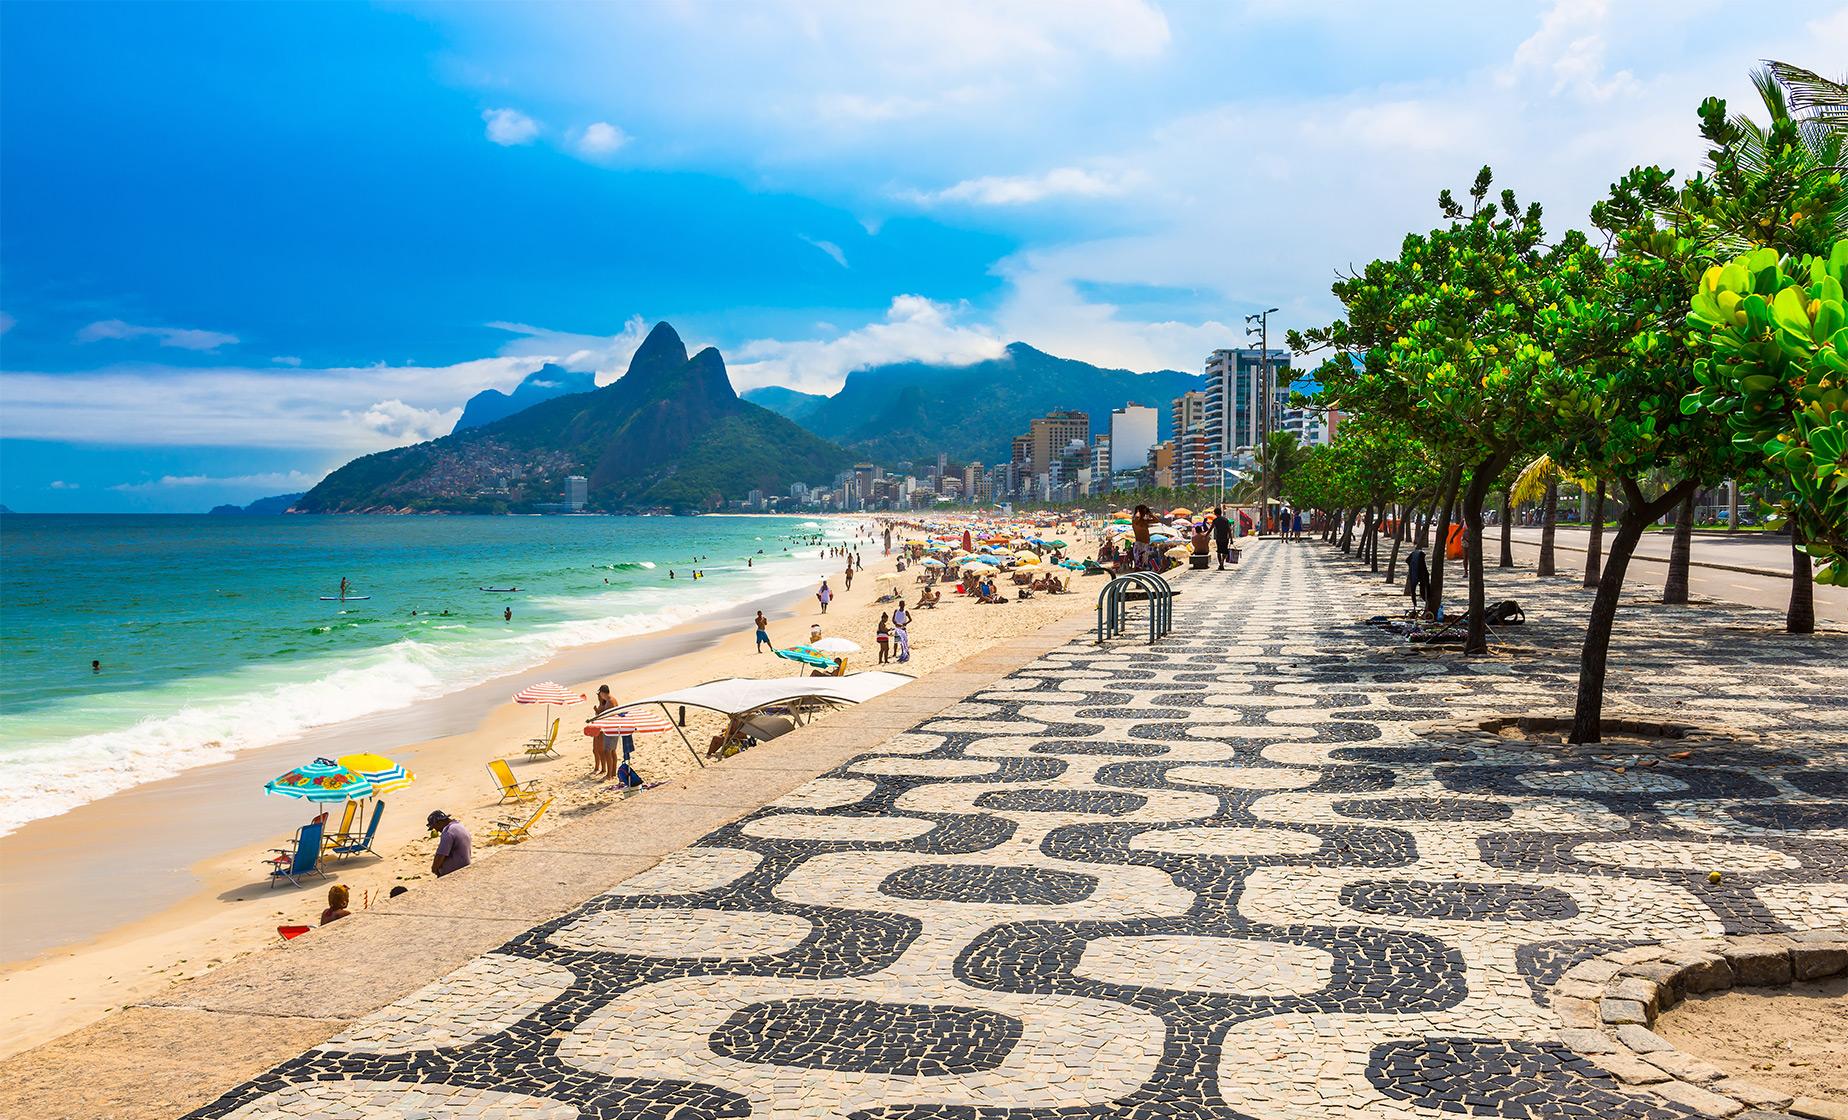 The Beaches of Rio